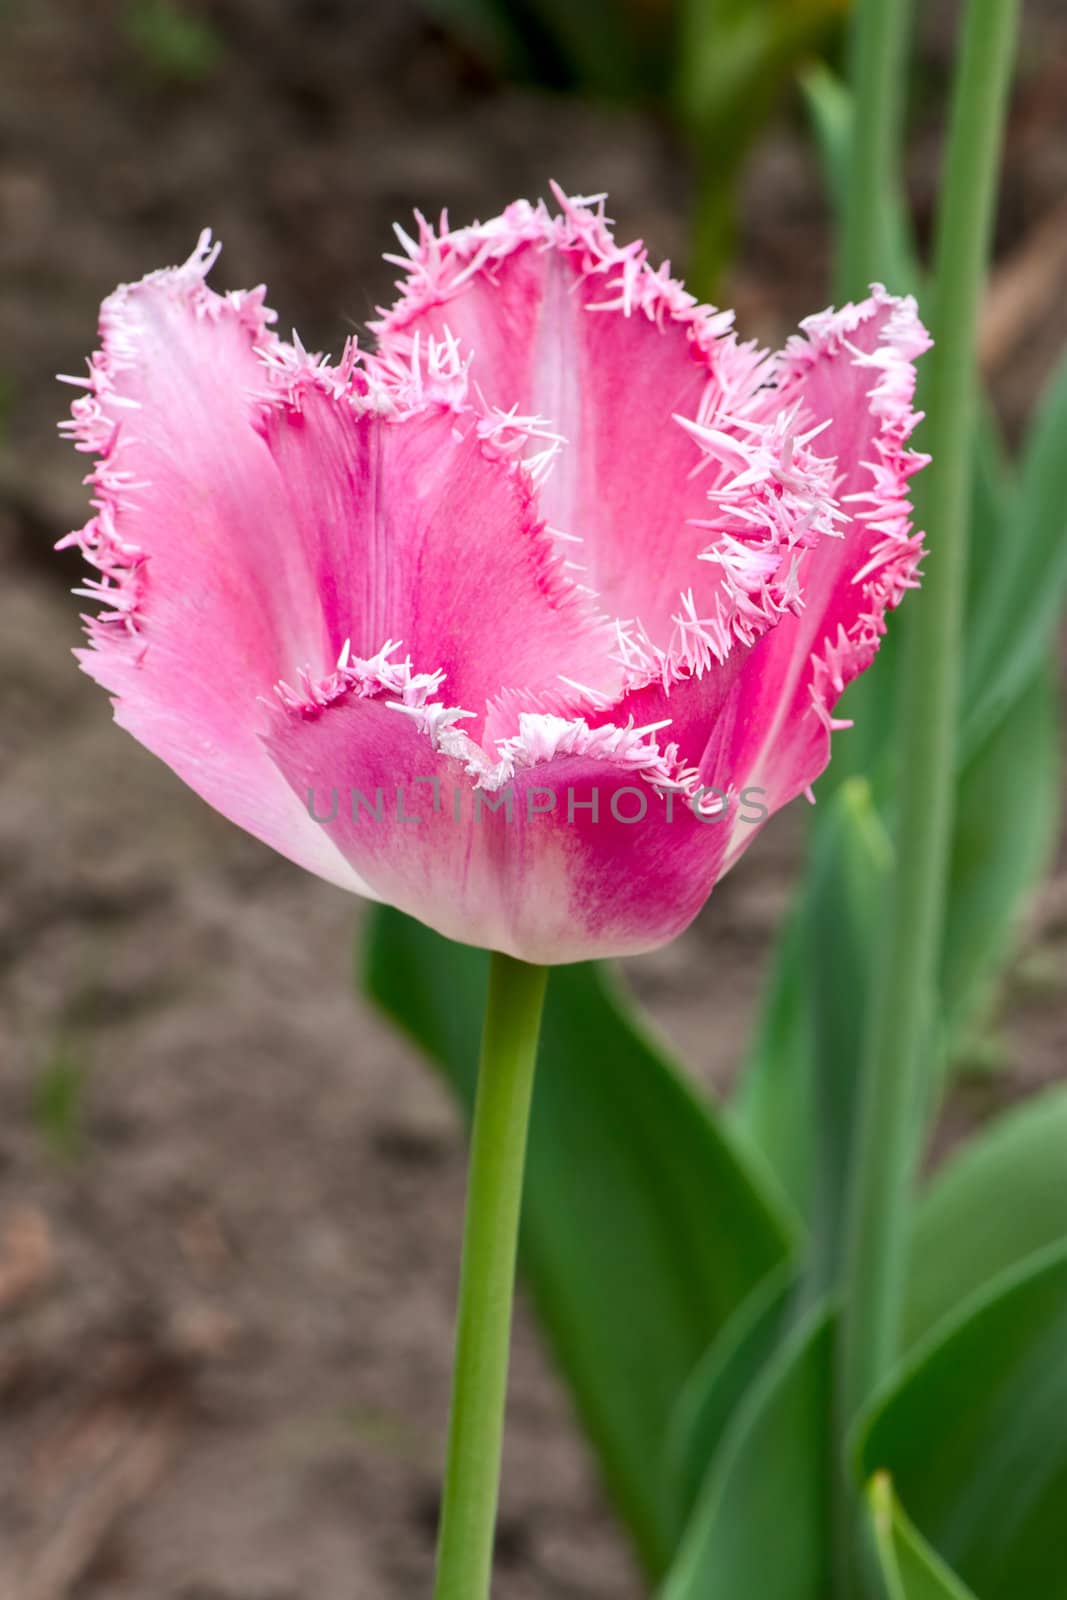 Flower pink tulip. Vertical shot.